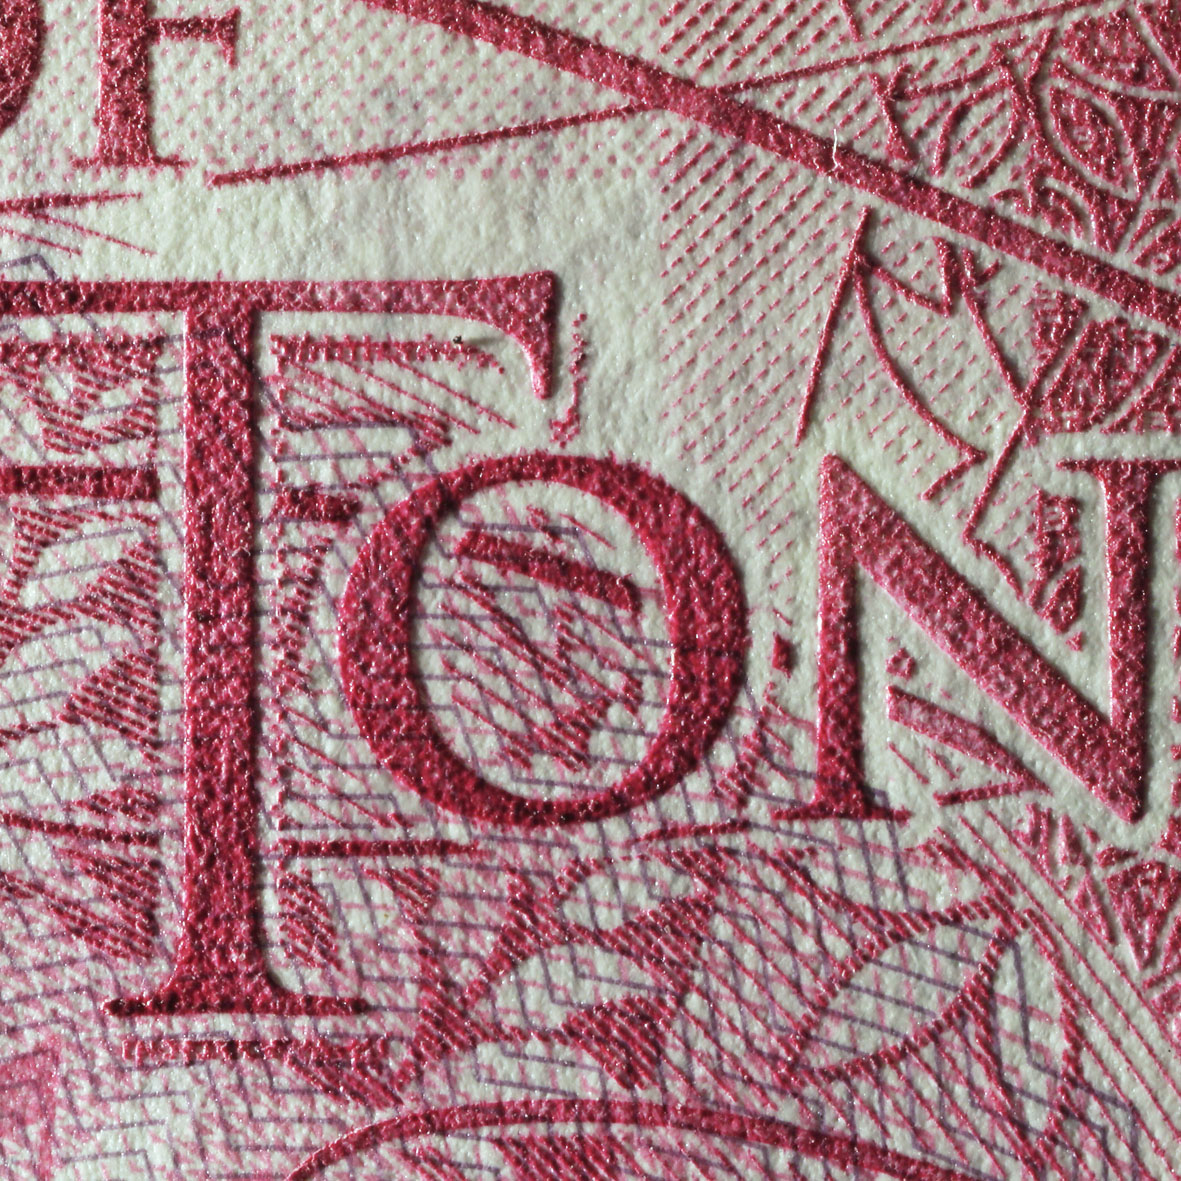 Tonga 100 2015 intaglio tactile print detail